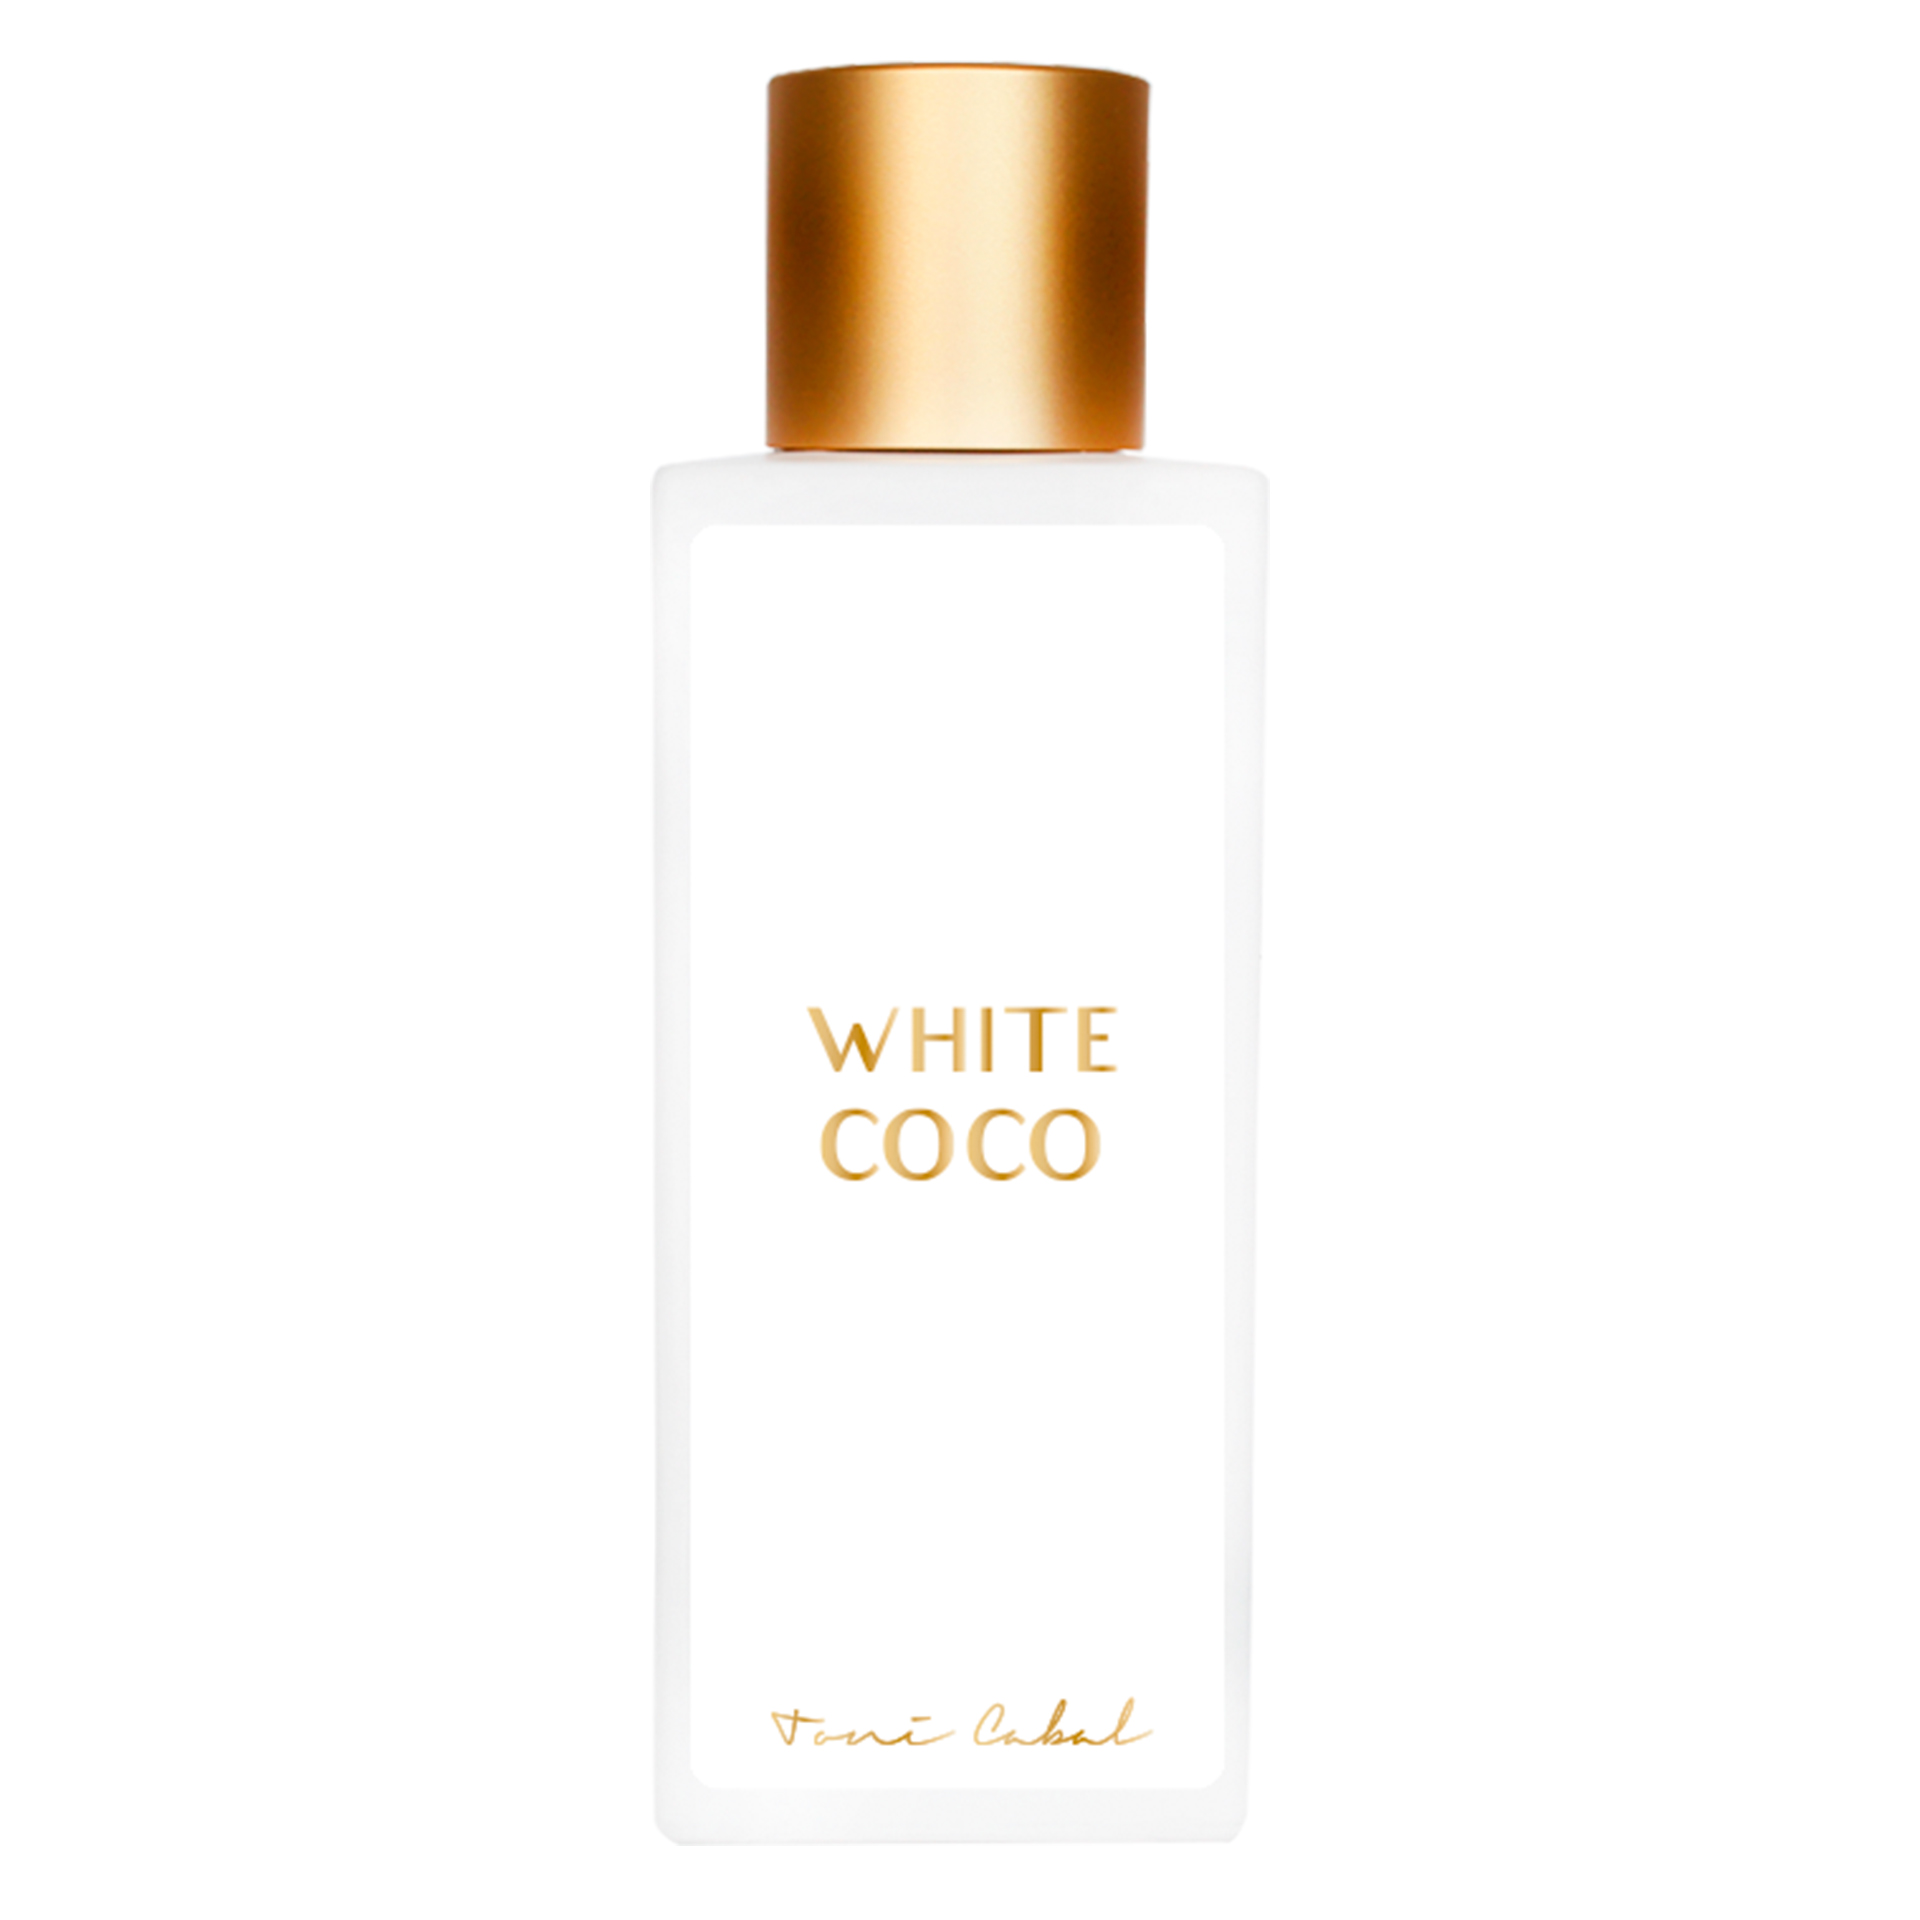 White Coco • Daring Light